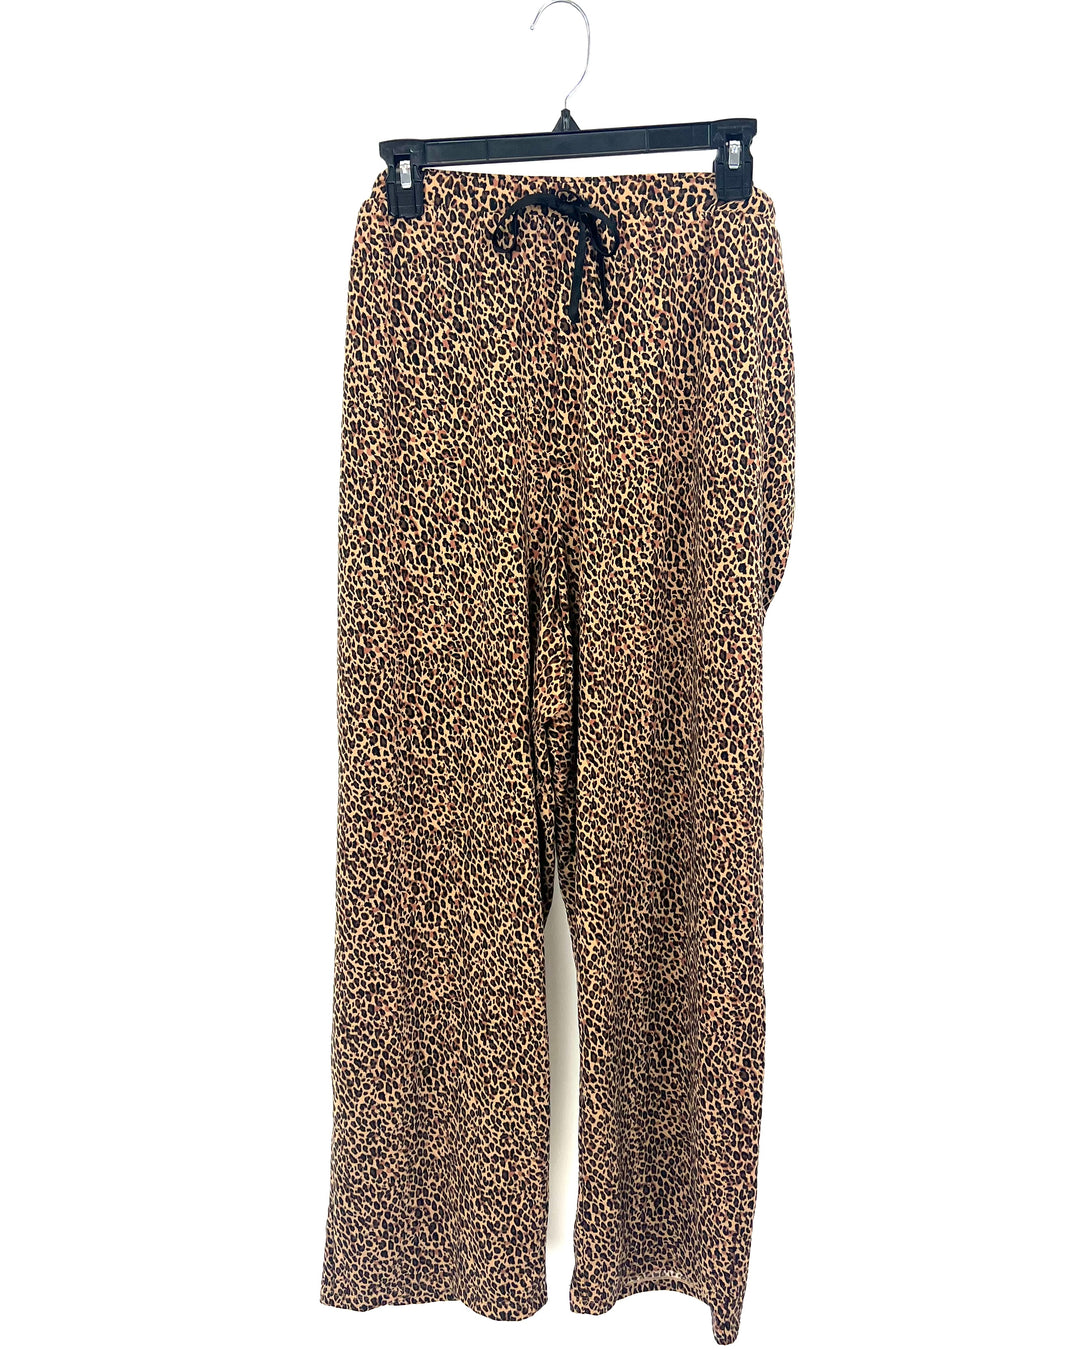 Cheetah Print Pajama Set - 1X